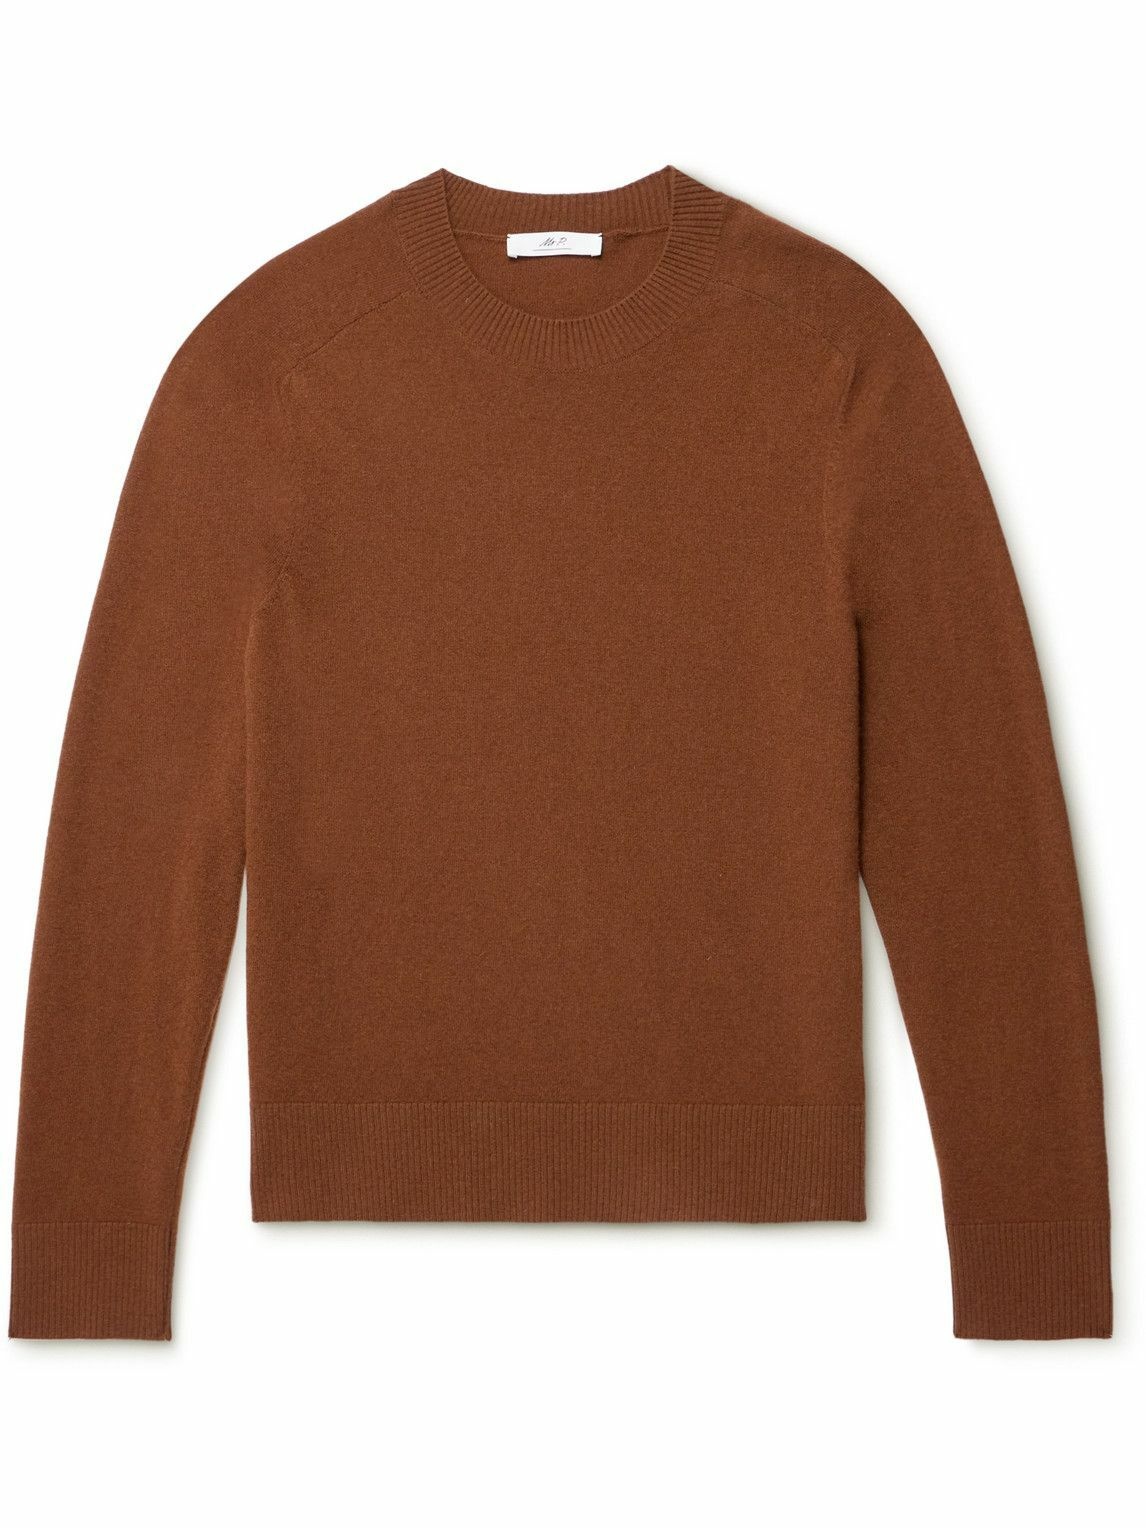 Mr P. - Wool Sweater - Brown Mr P.